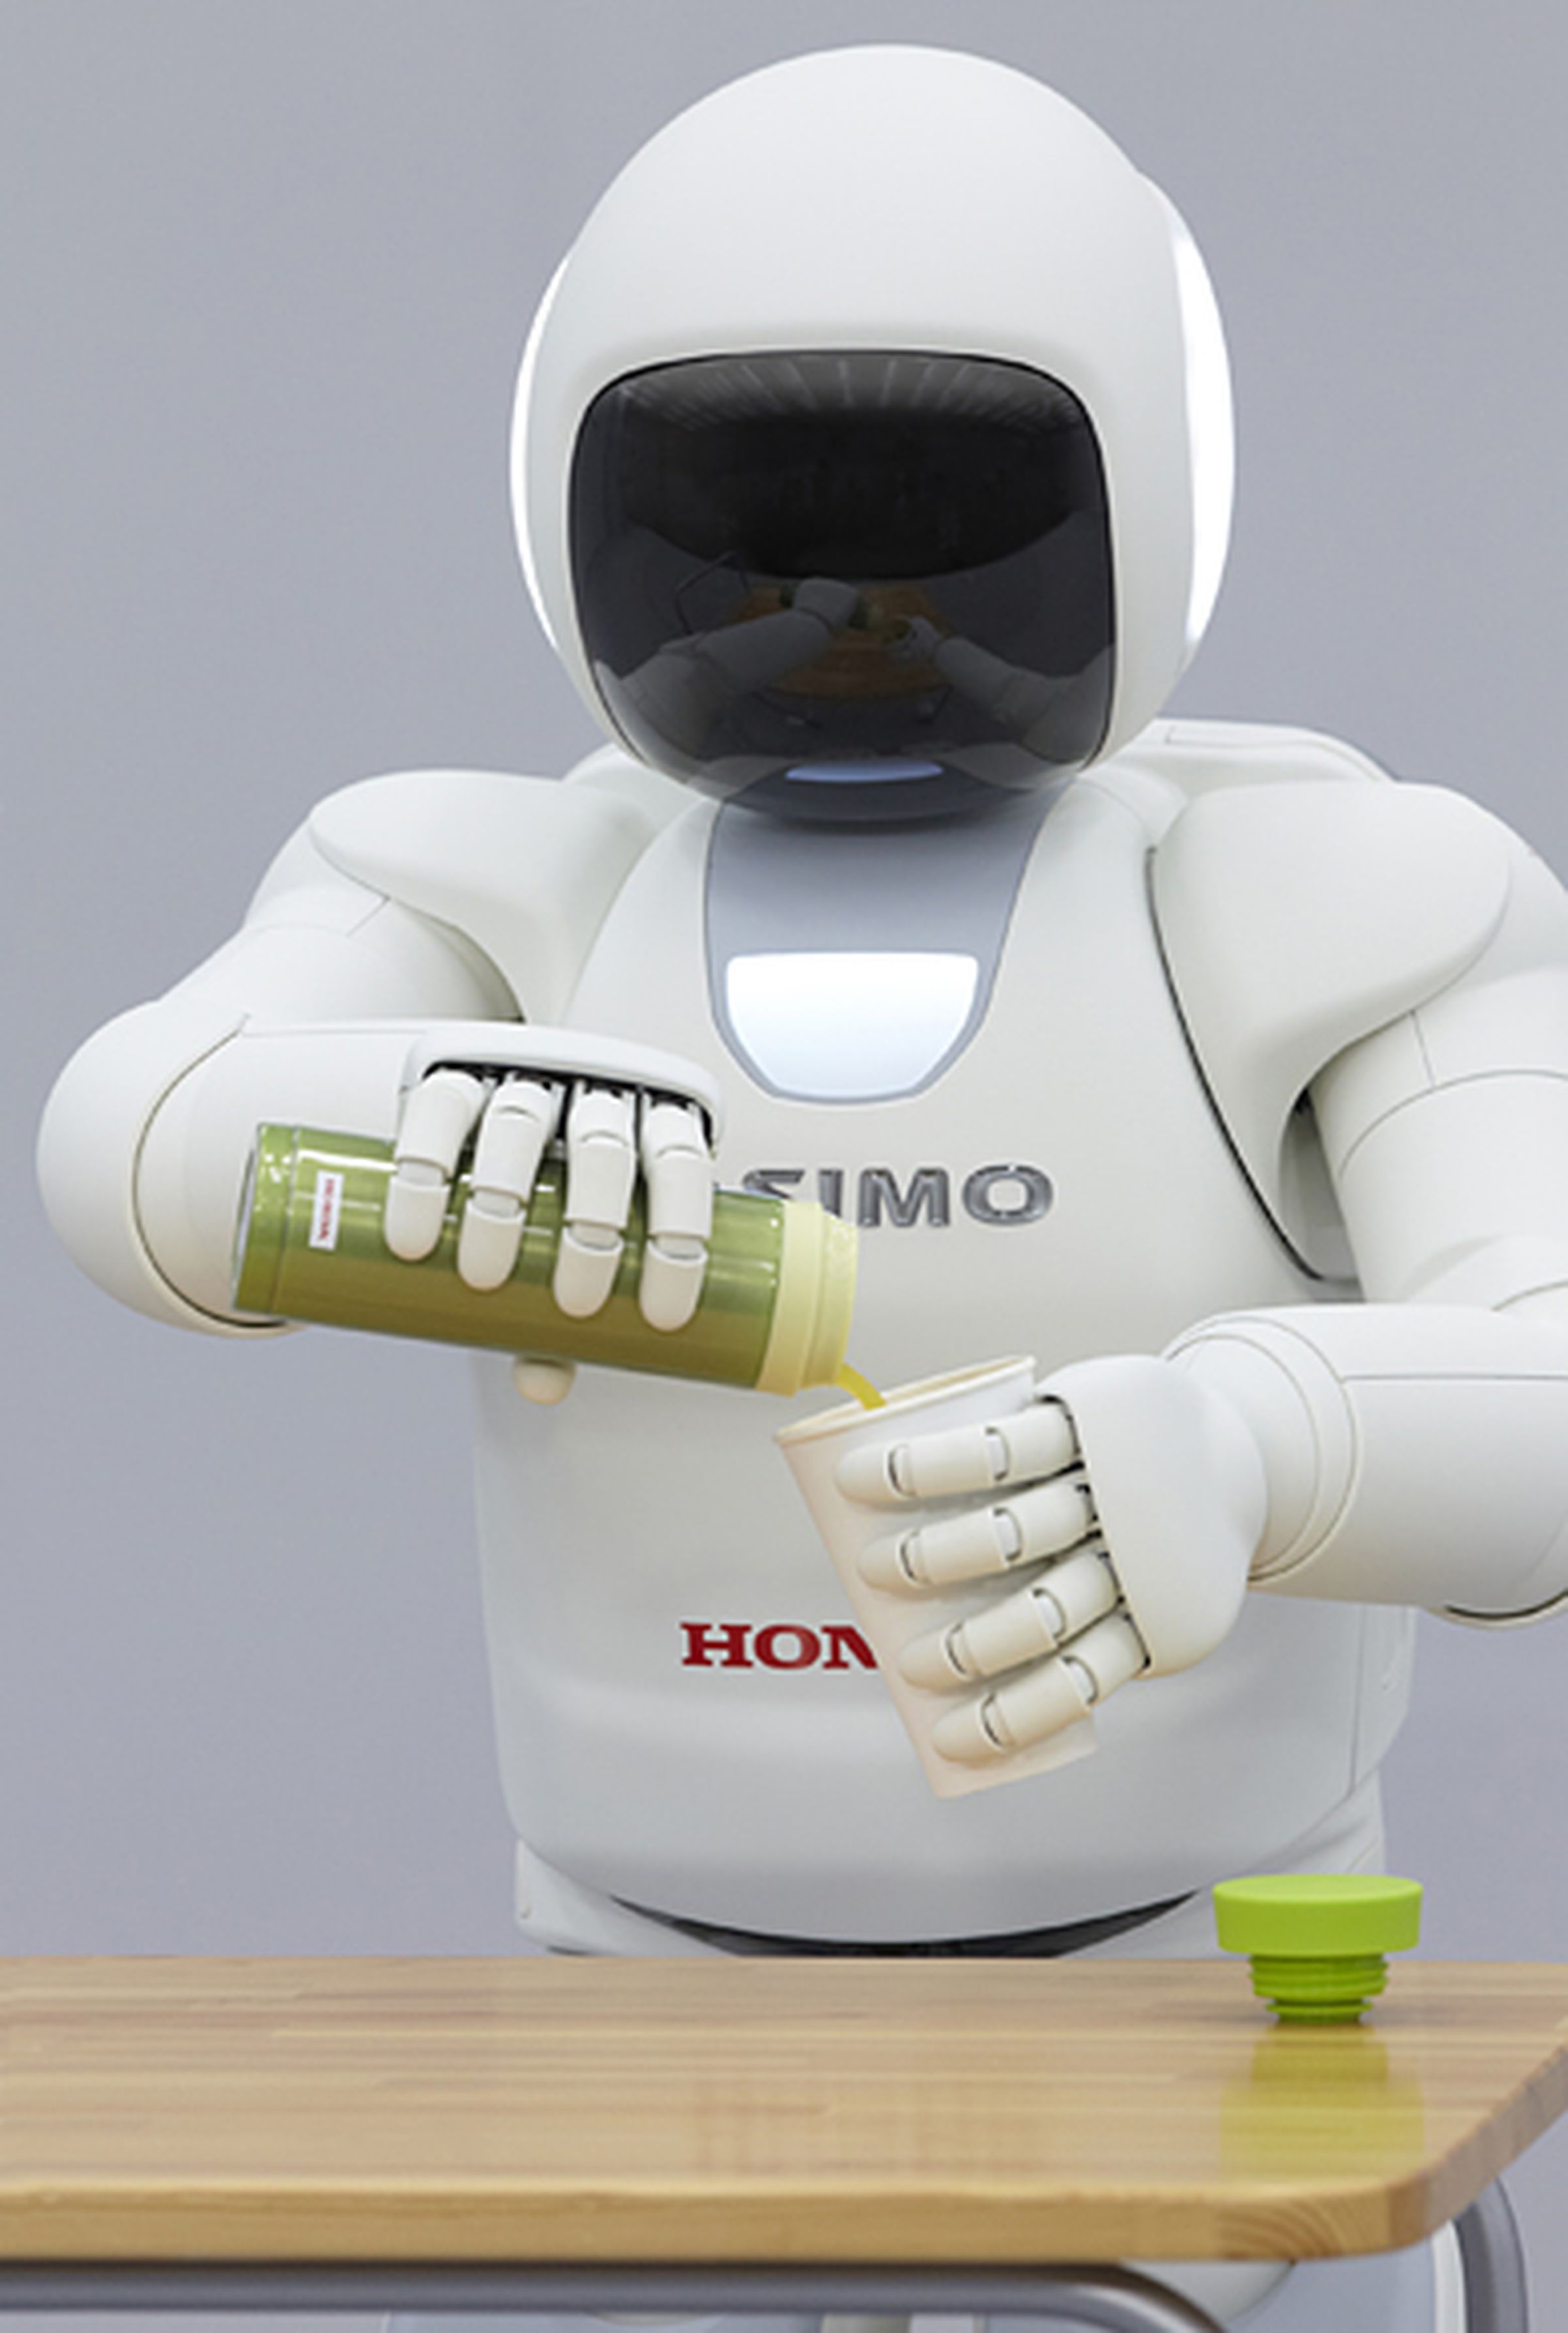 Honda's new Asimo Robot pictures